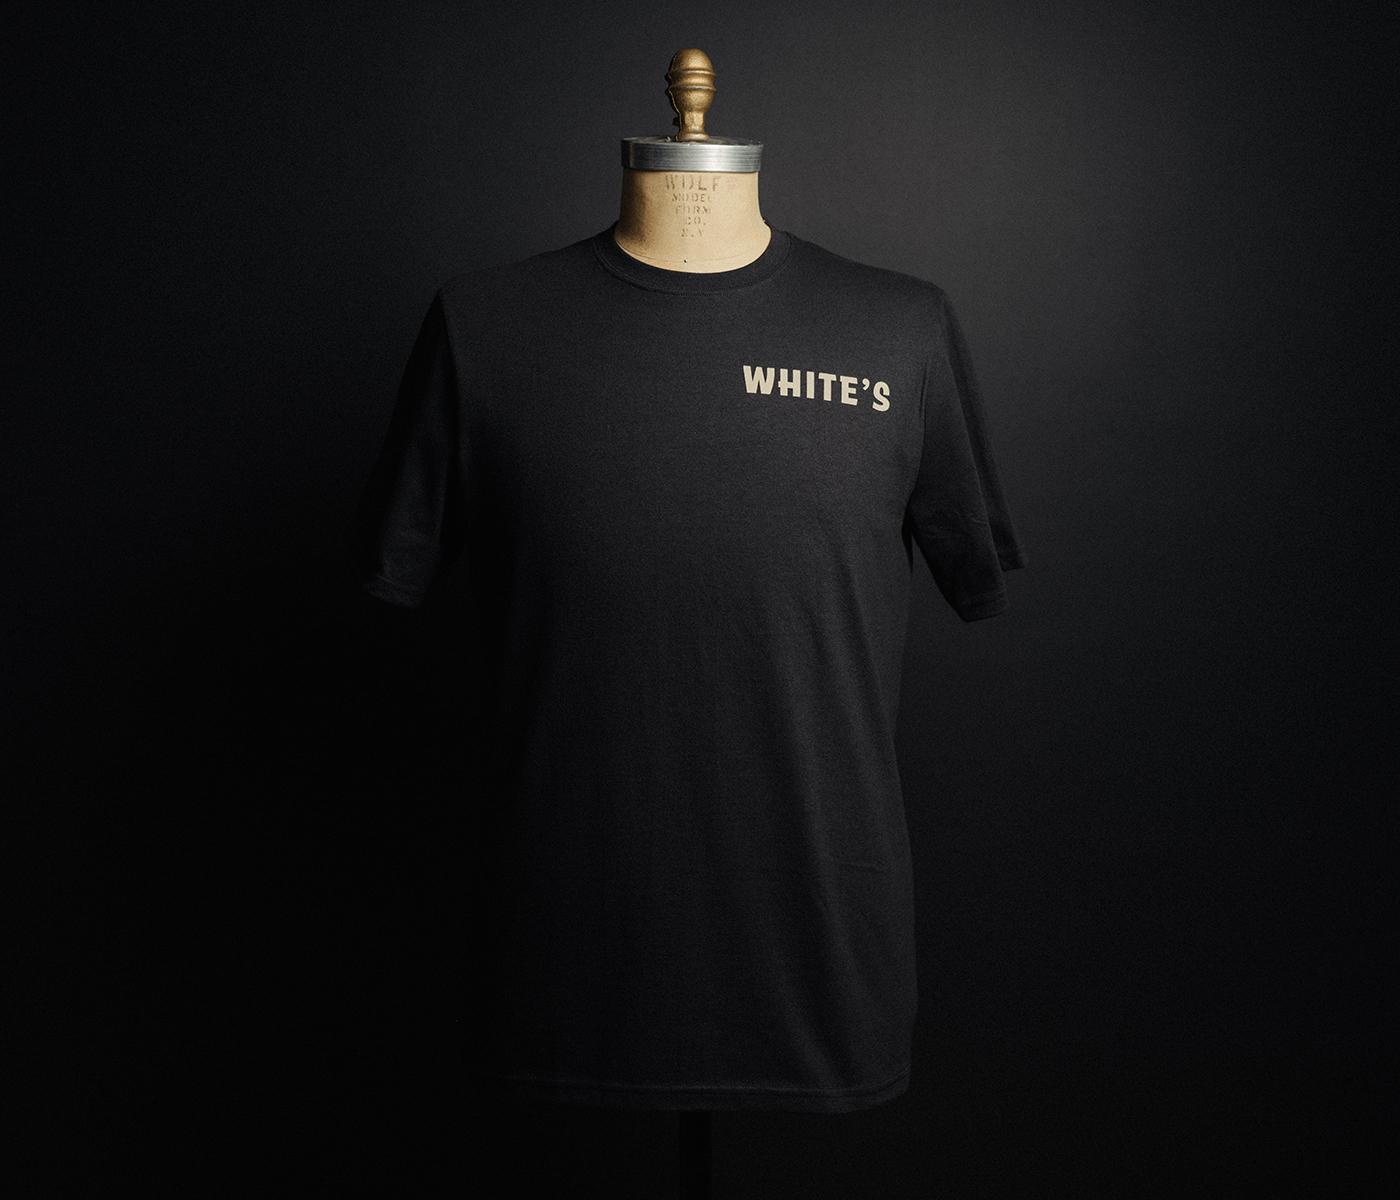 Vintage Graphic T-Shirt: White's Boots, Inc.